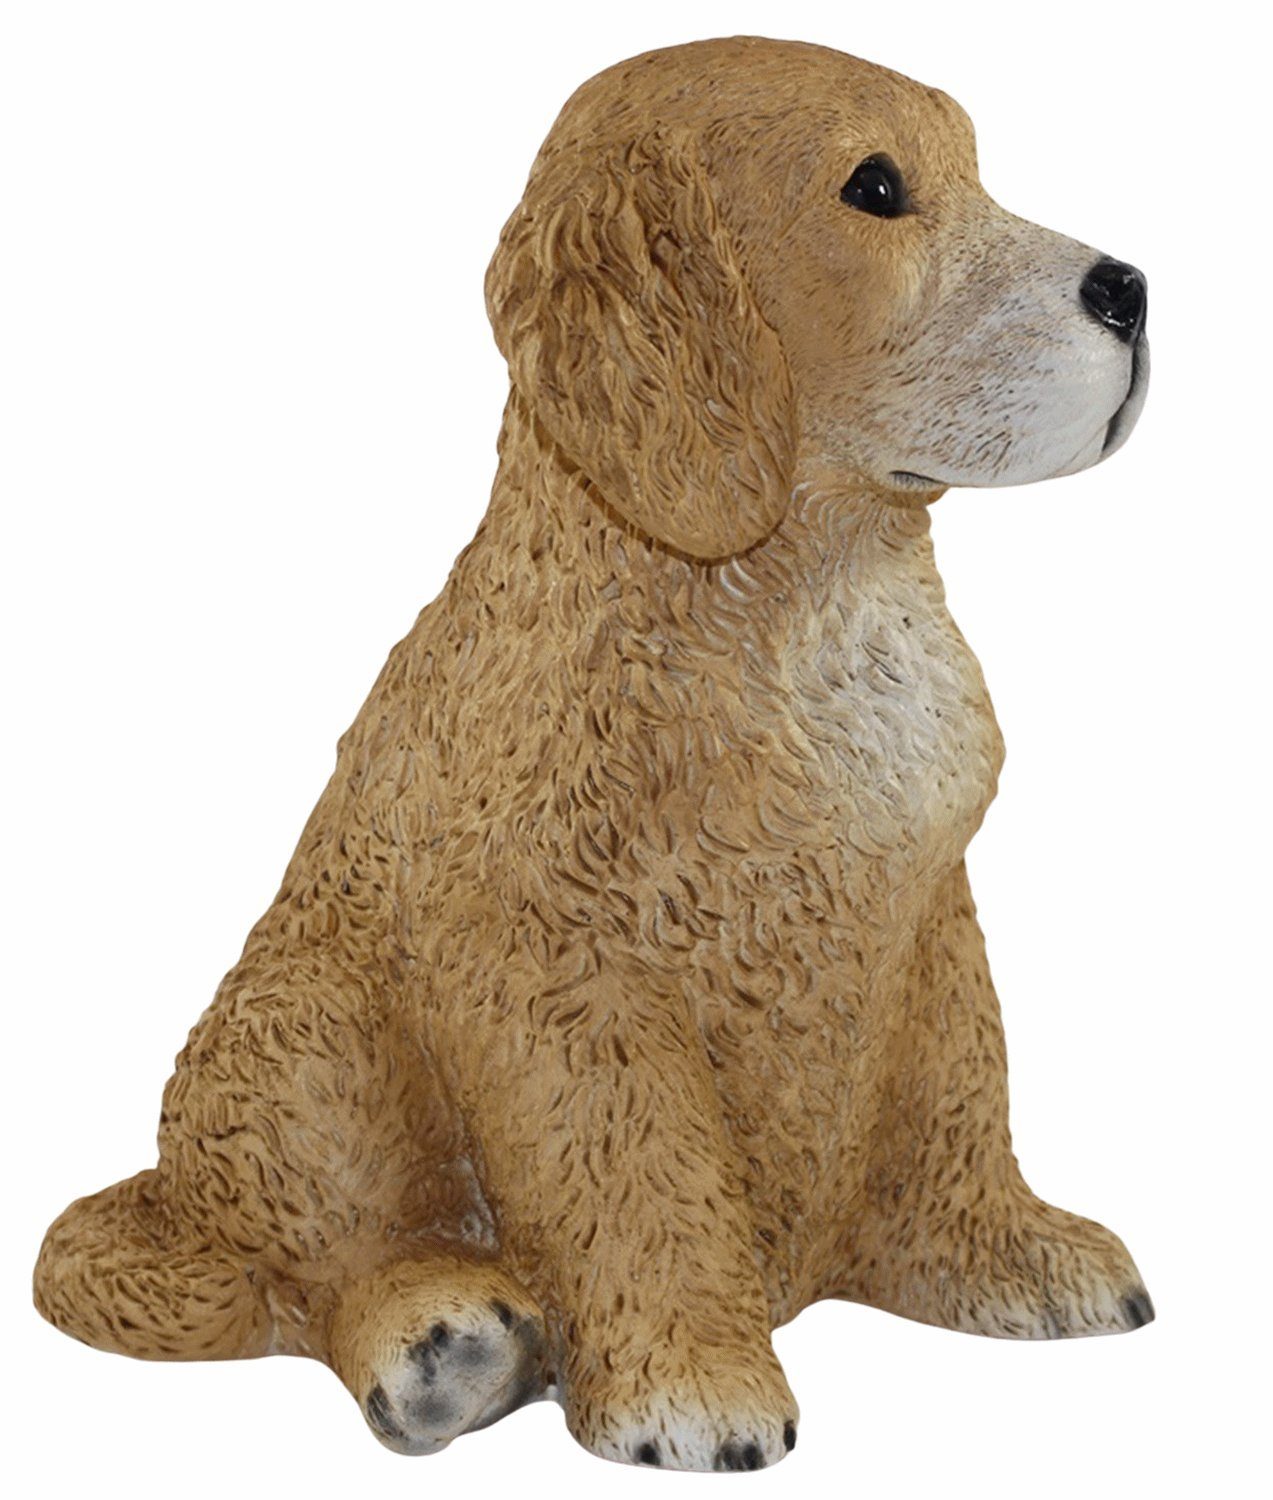 Golden Figur Hund H Deko Tierfigur Welpe Castagna Resin sitzend Hundefigur 24 Retriever aus Kollektion Castagna cm